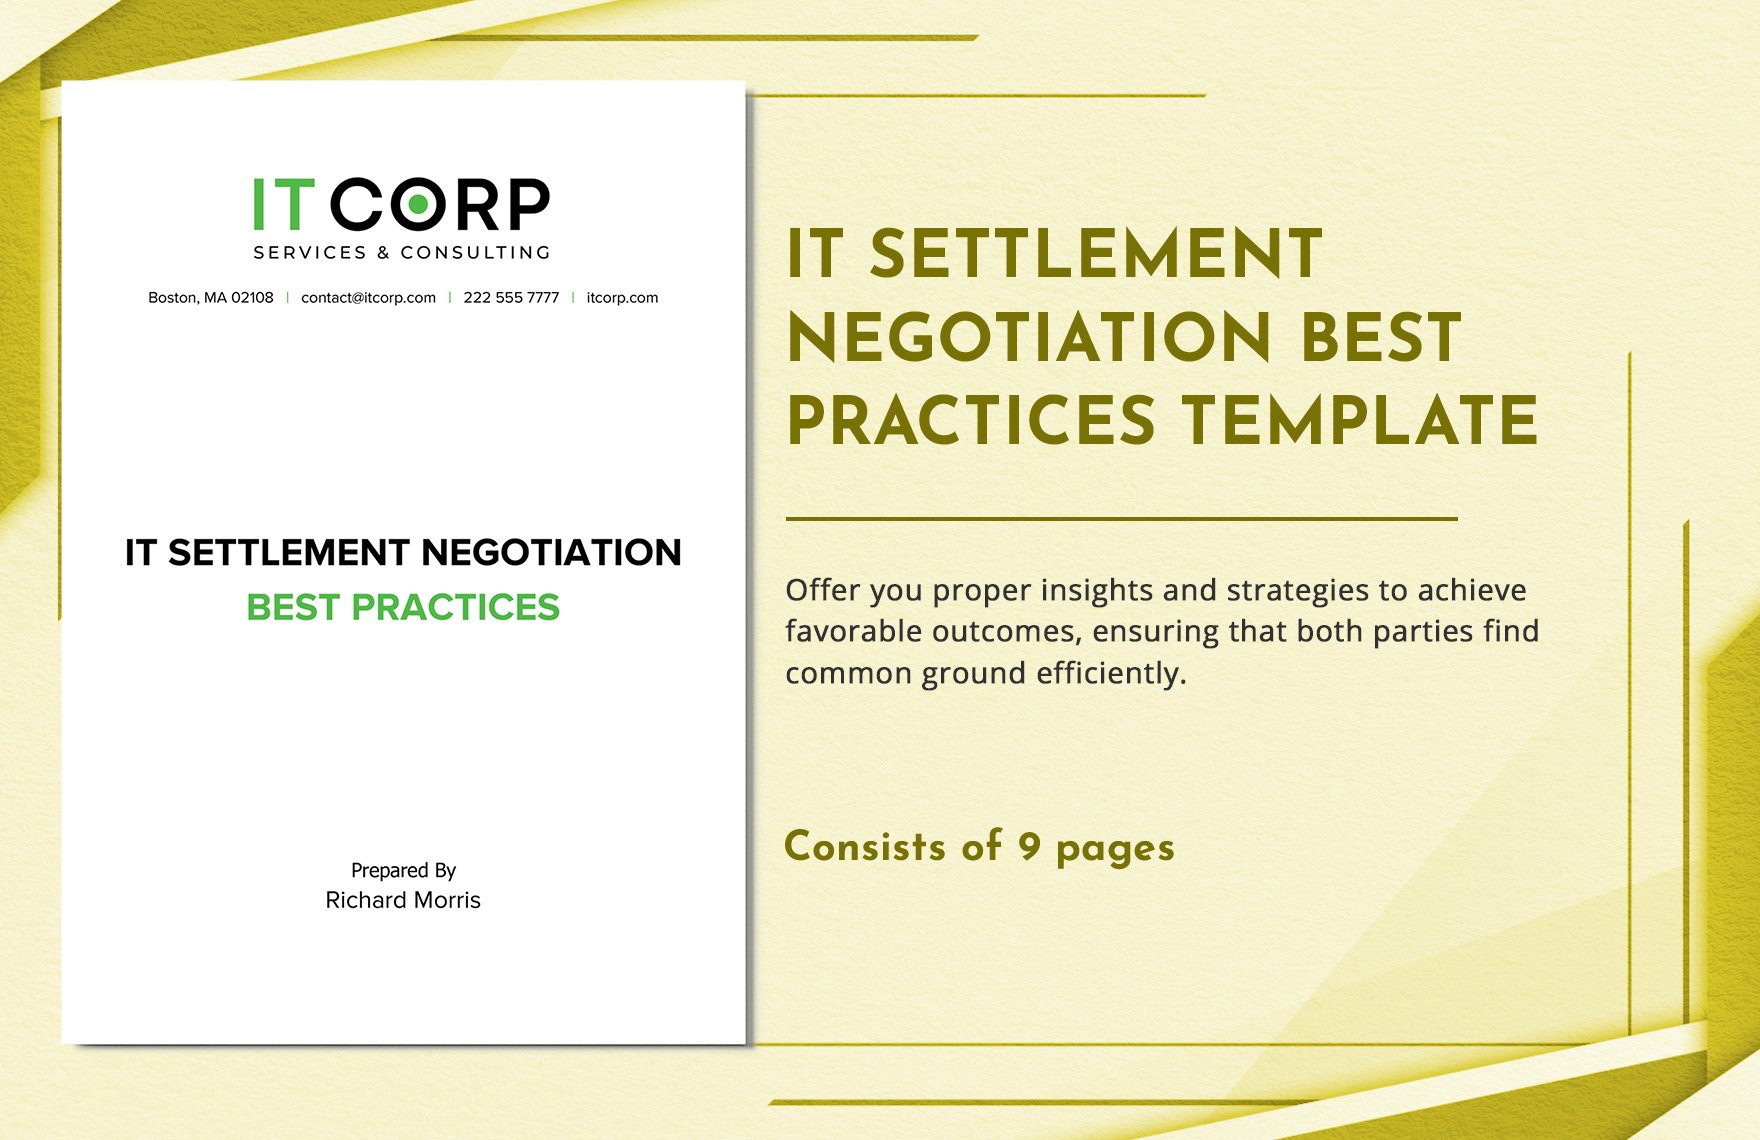 IT Settlement Negotiation Best Practices Template